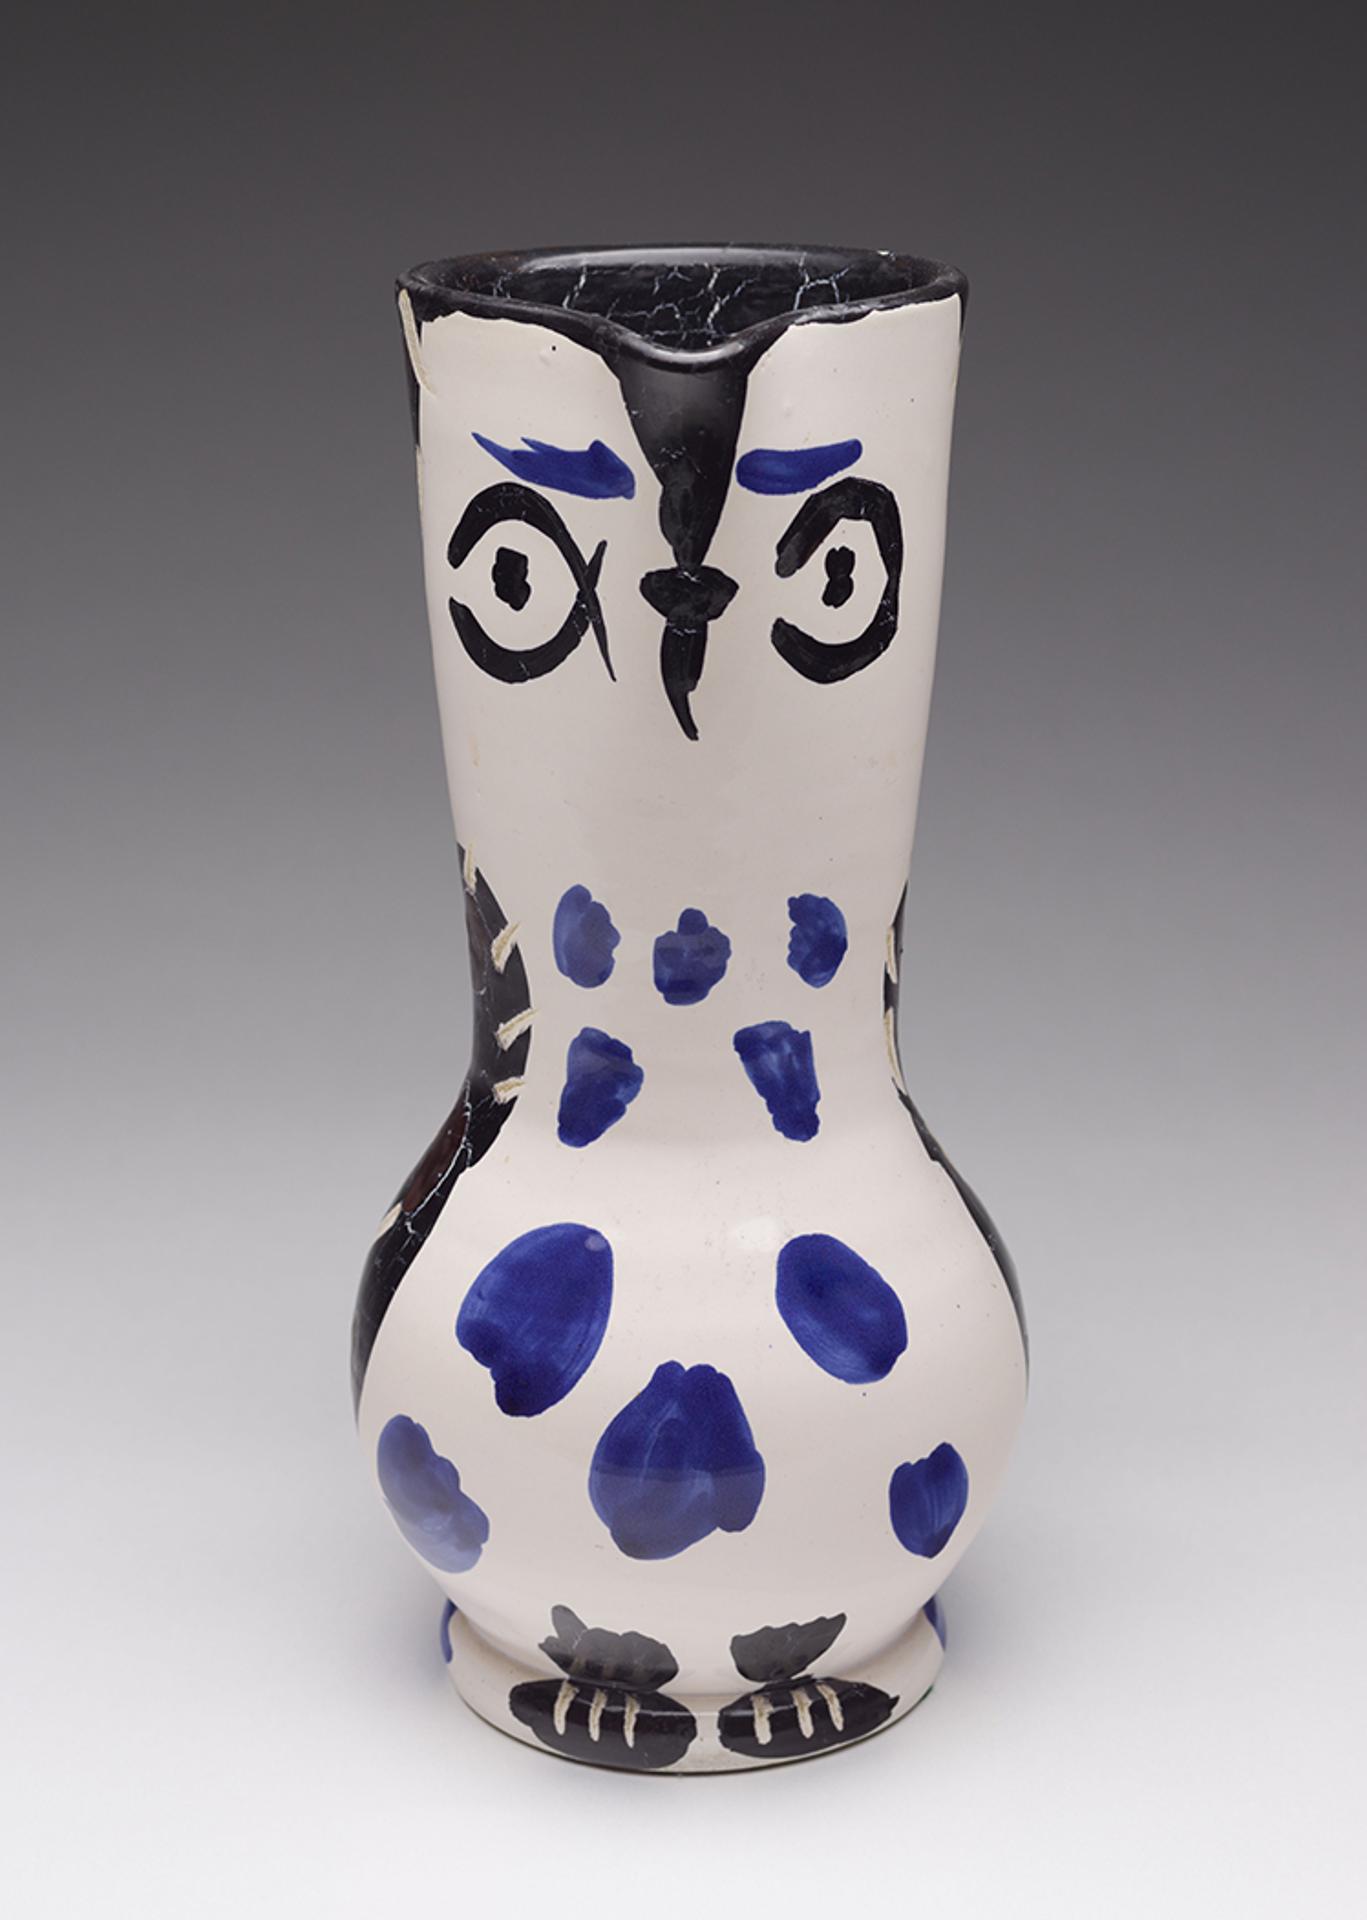 Pablo Ruiz Picasso (1881-1973) - Small owl jug